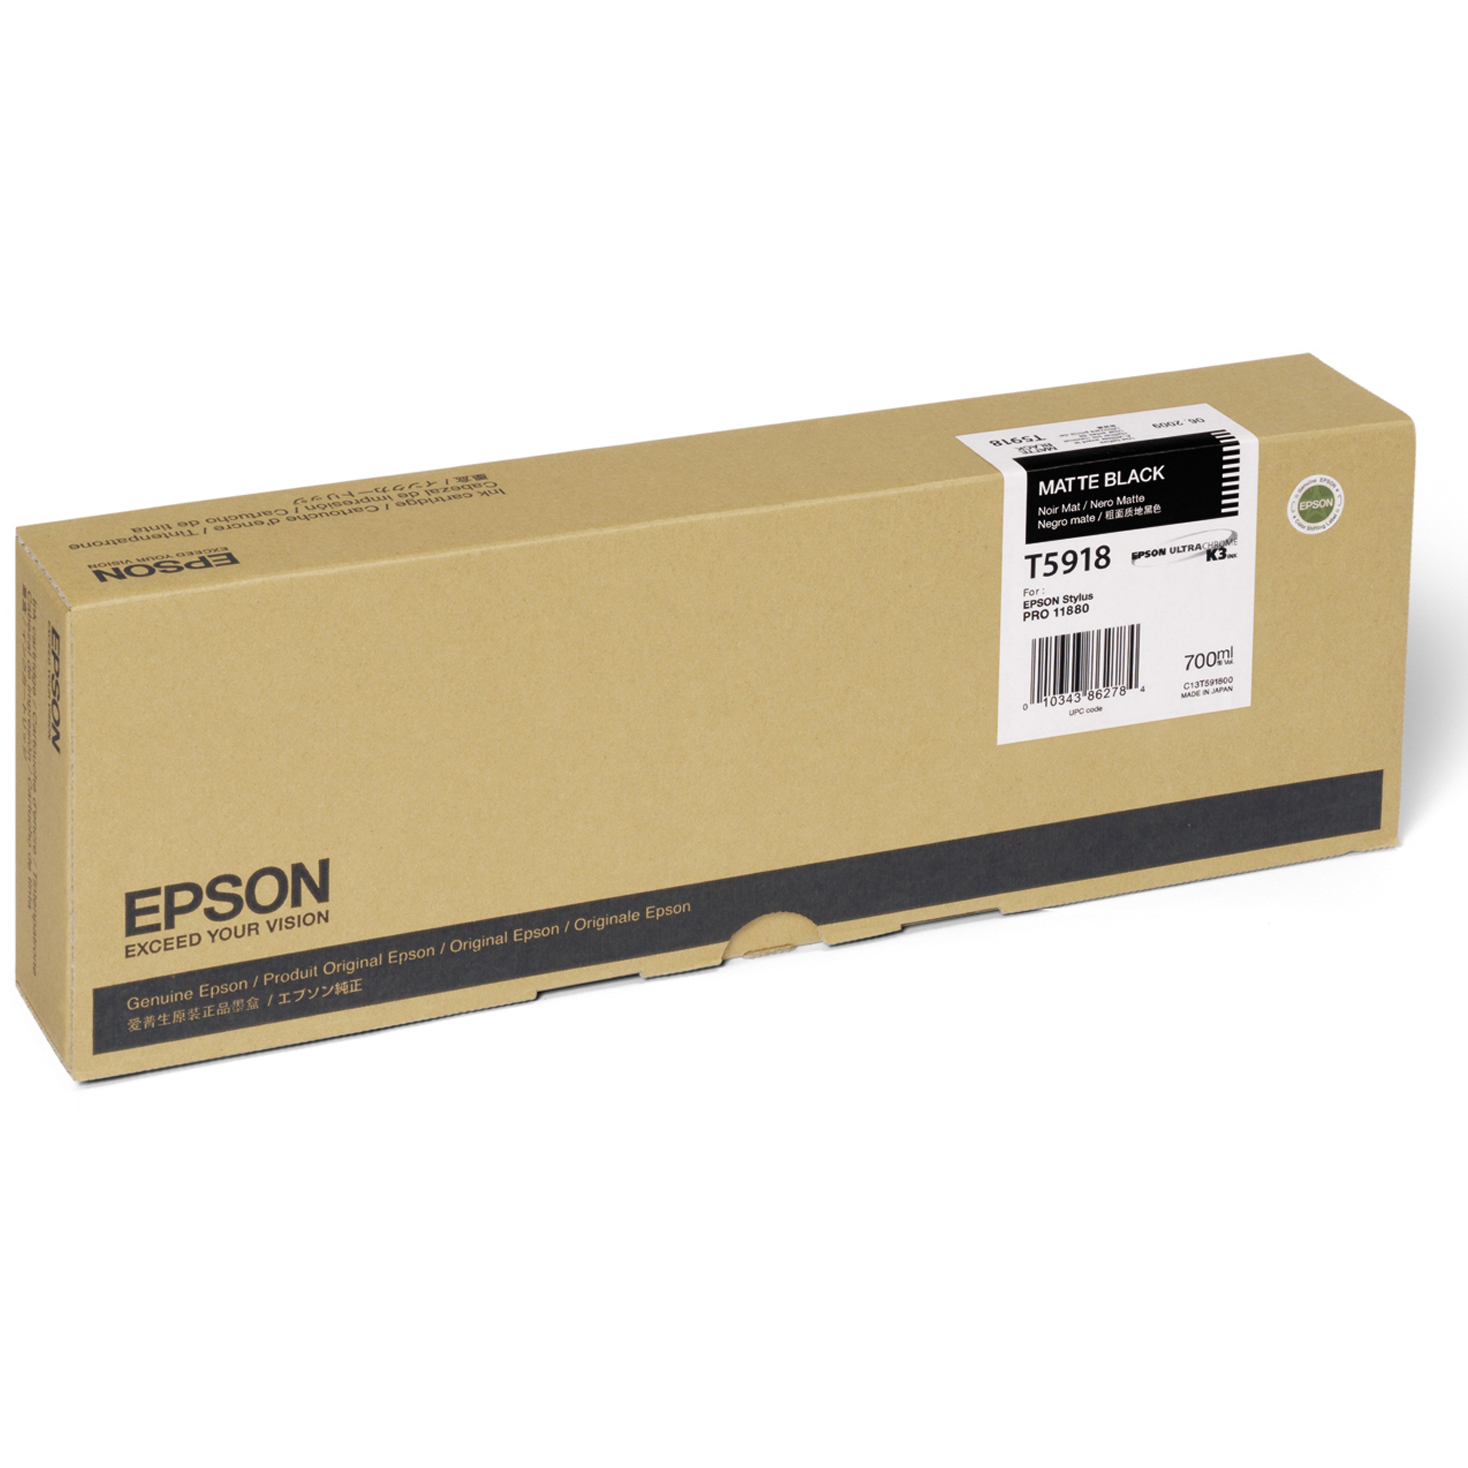 Original Epson T5918 Matte Black Ink Cartridge (C13T591800)